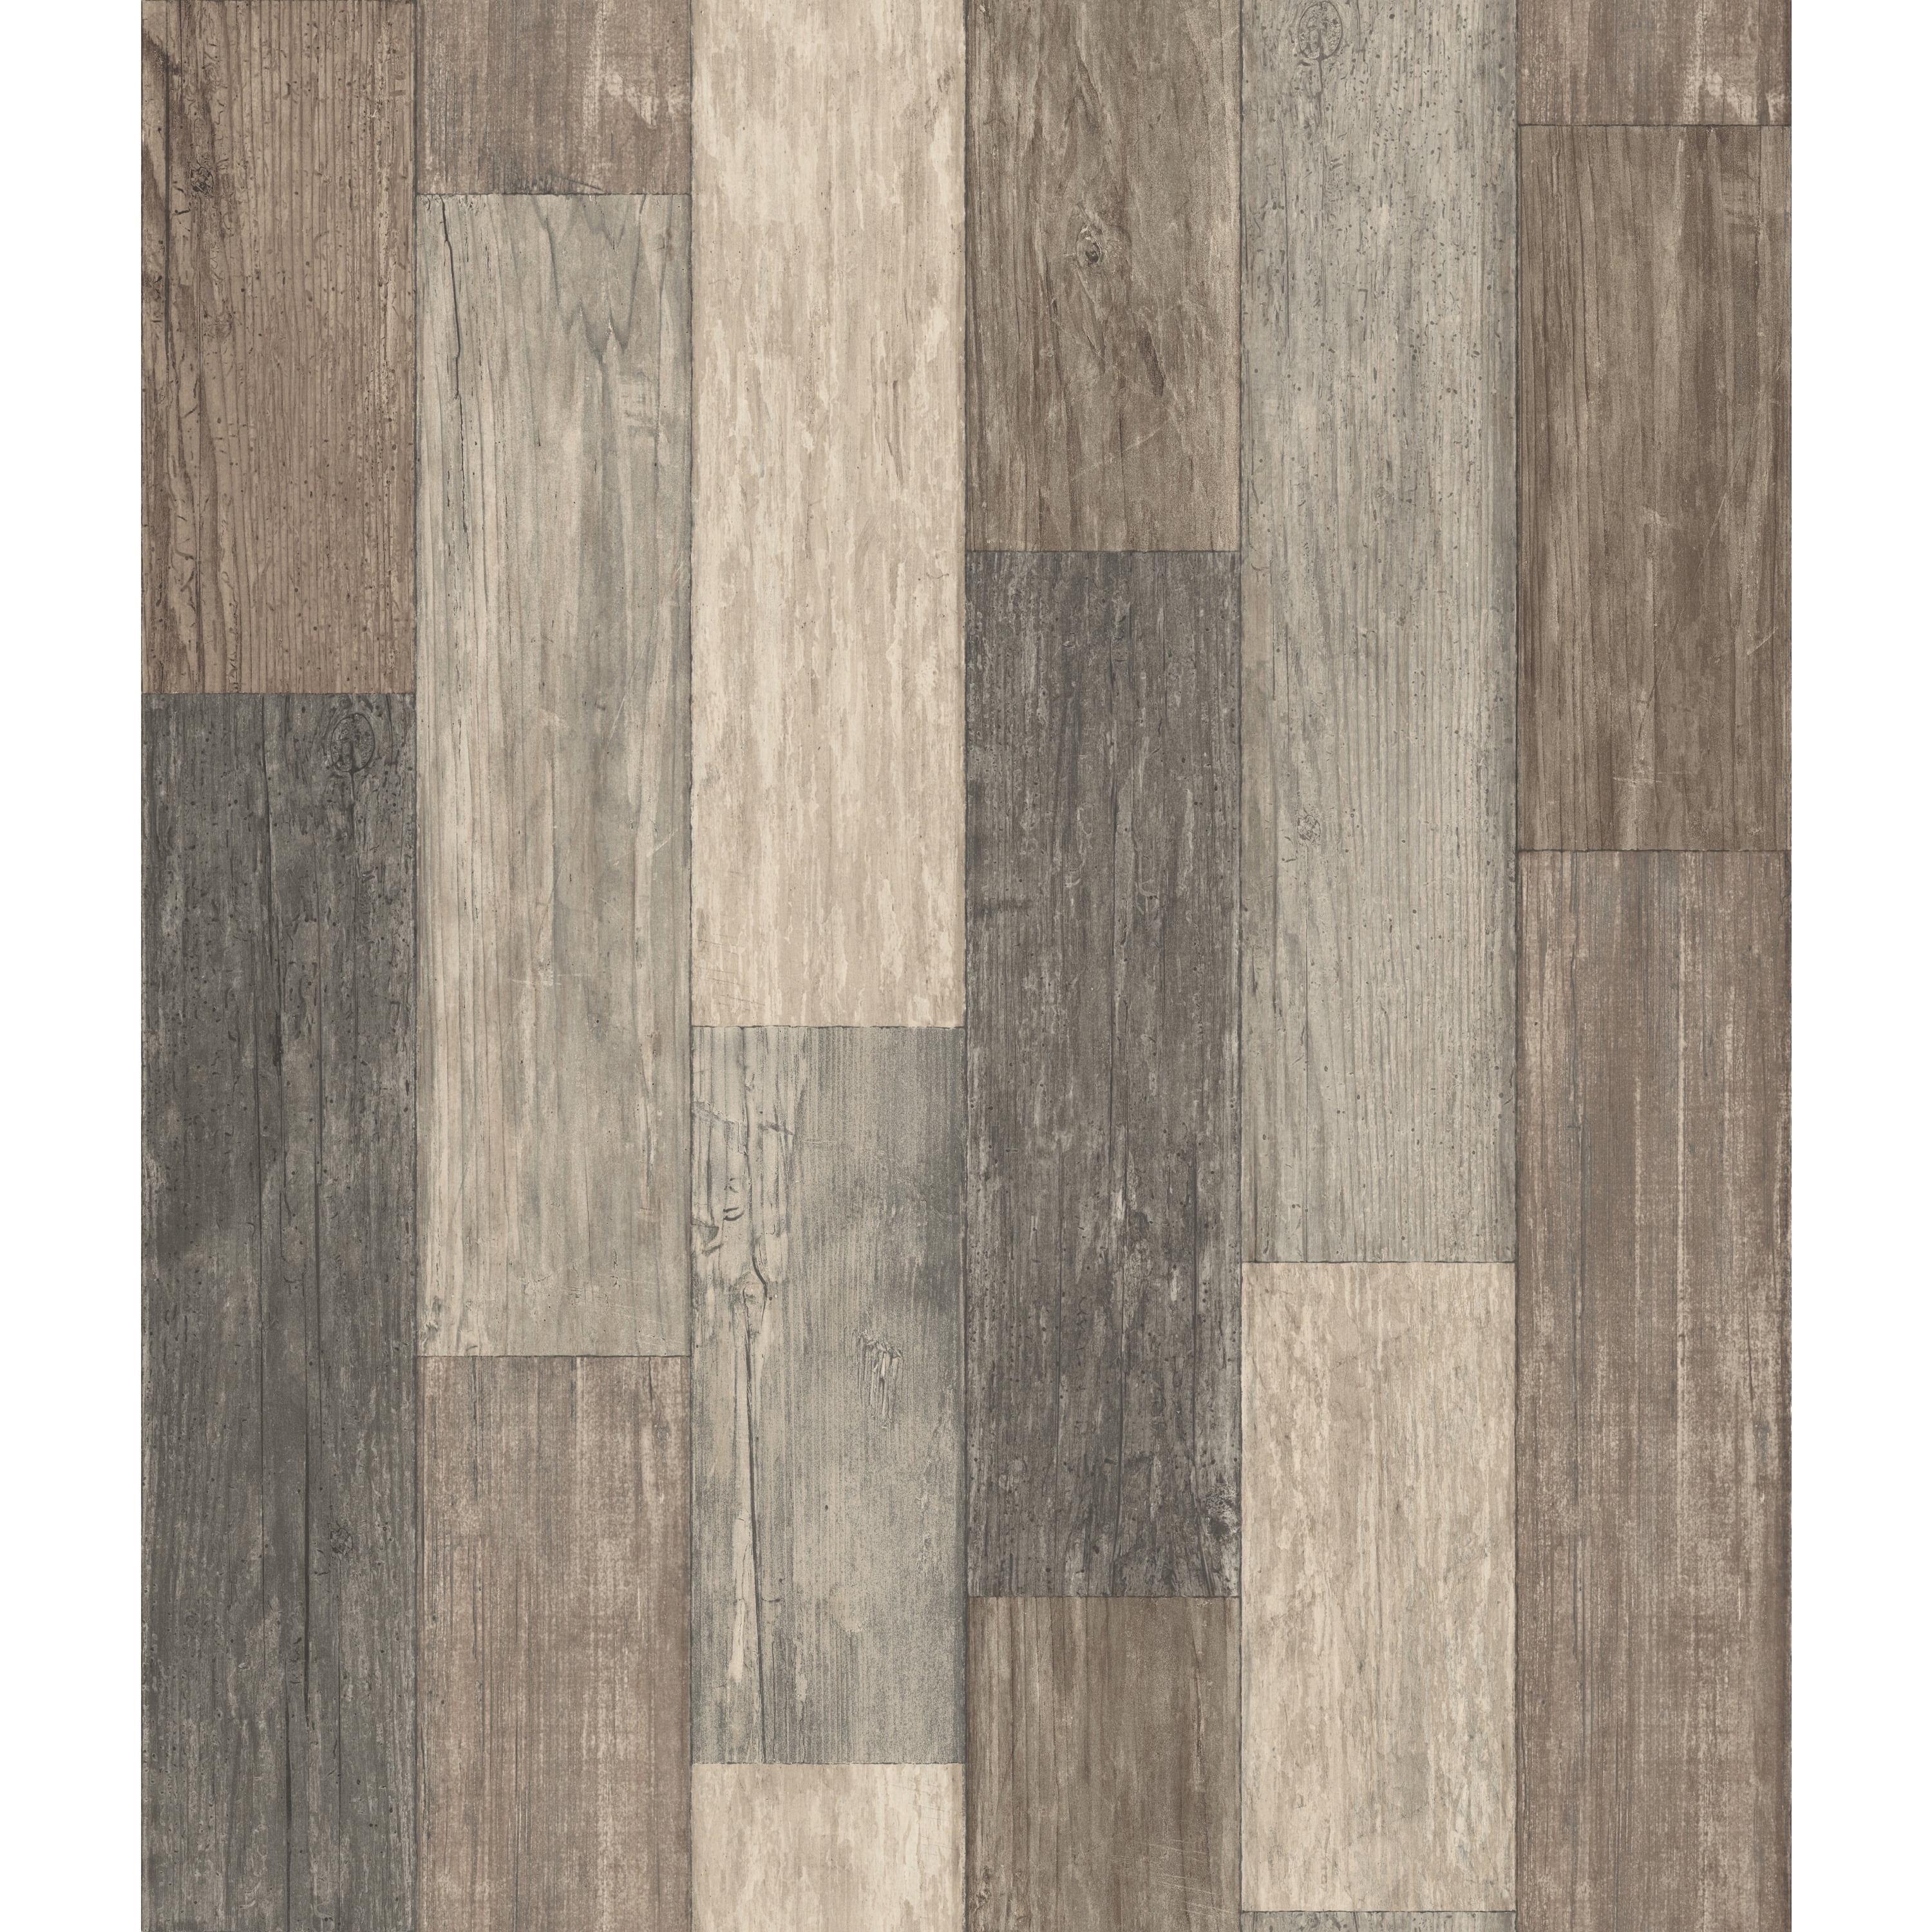 RoomMates Dark Brown Weathered Wood Plank Peel and Stick Wallpaper